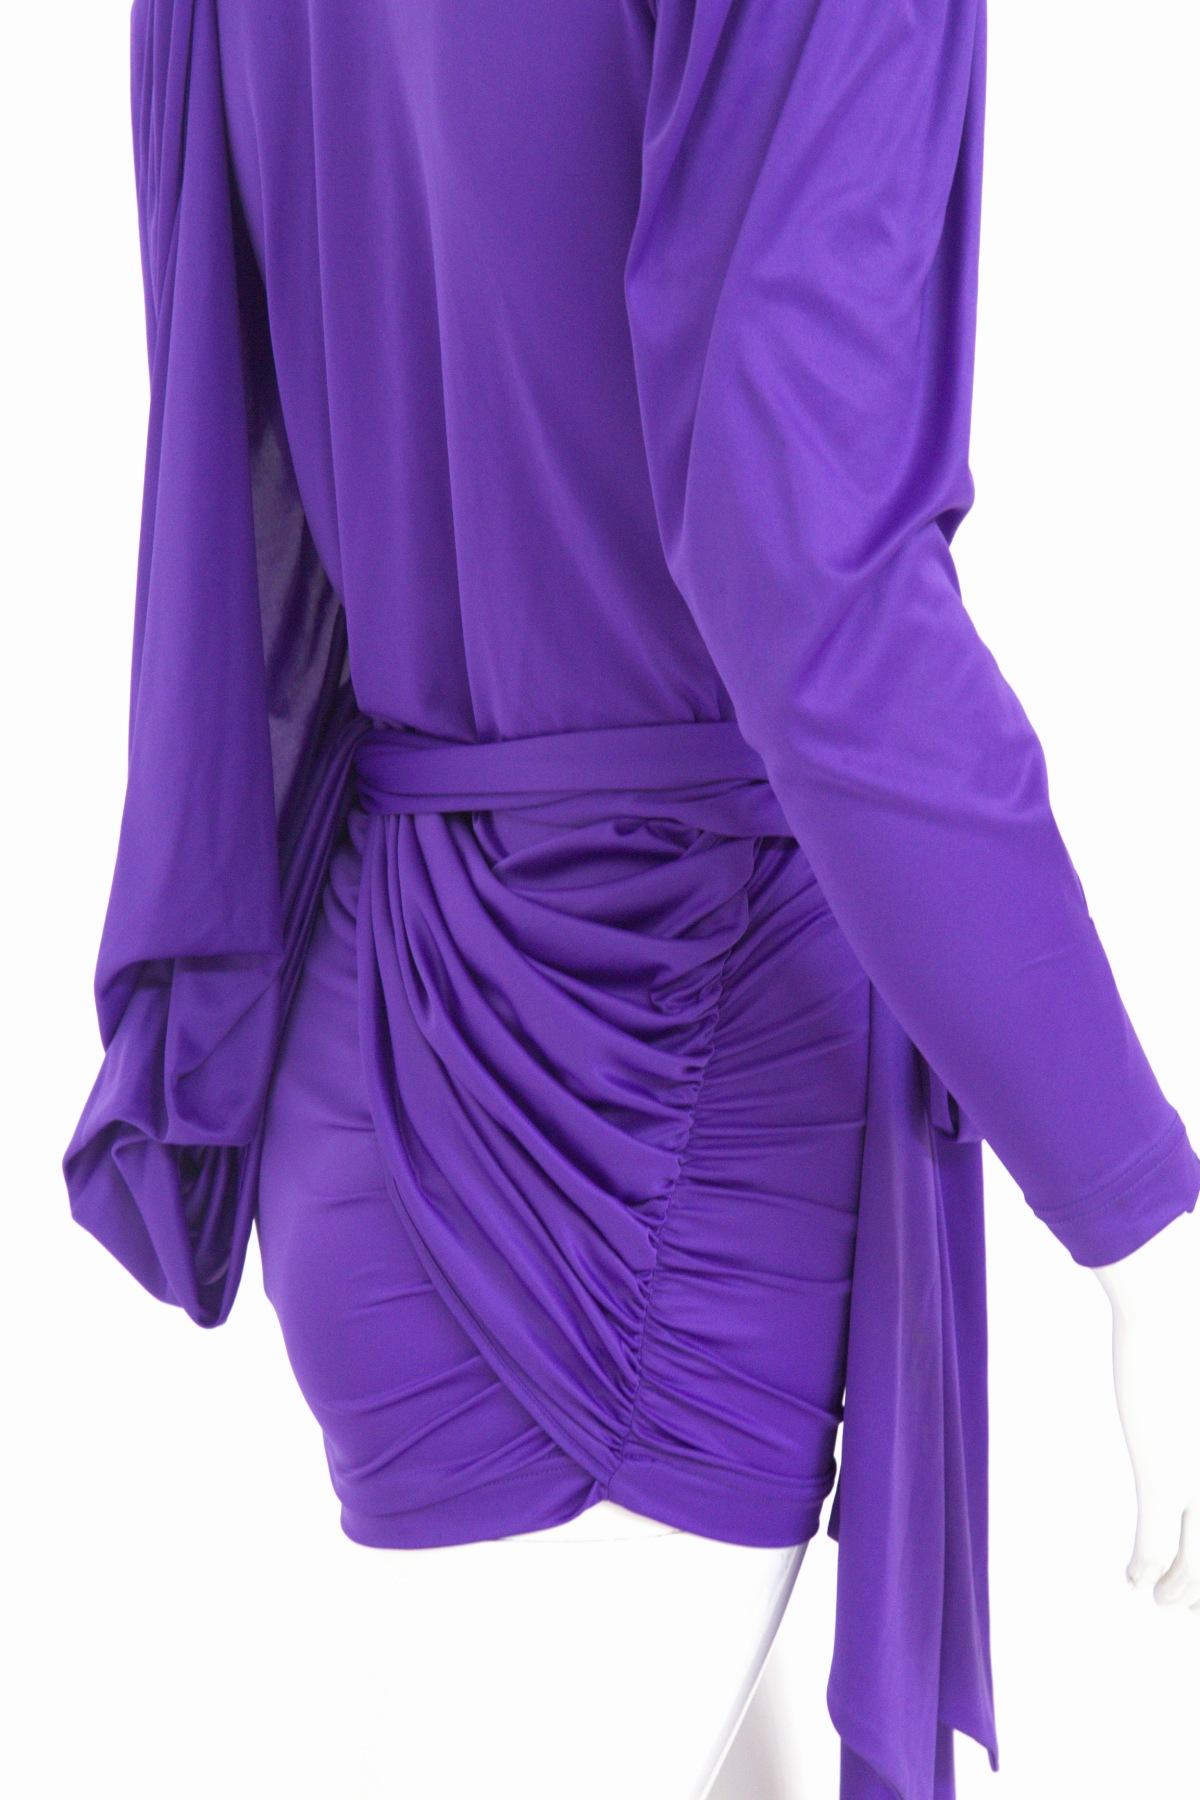 Balenciaga Luxurious Vintage Purple Dress For Sale 8